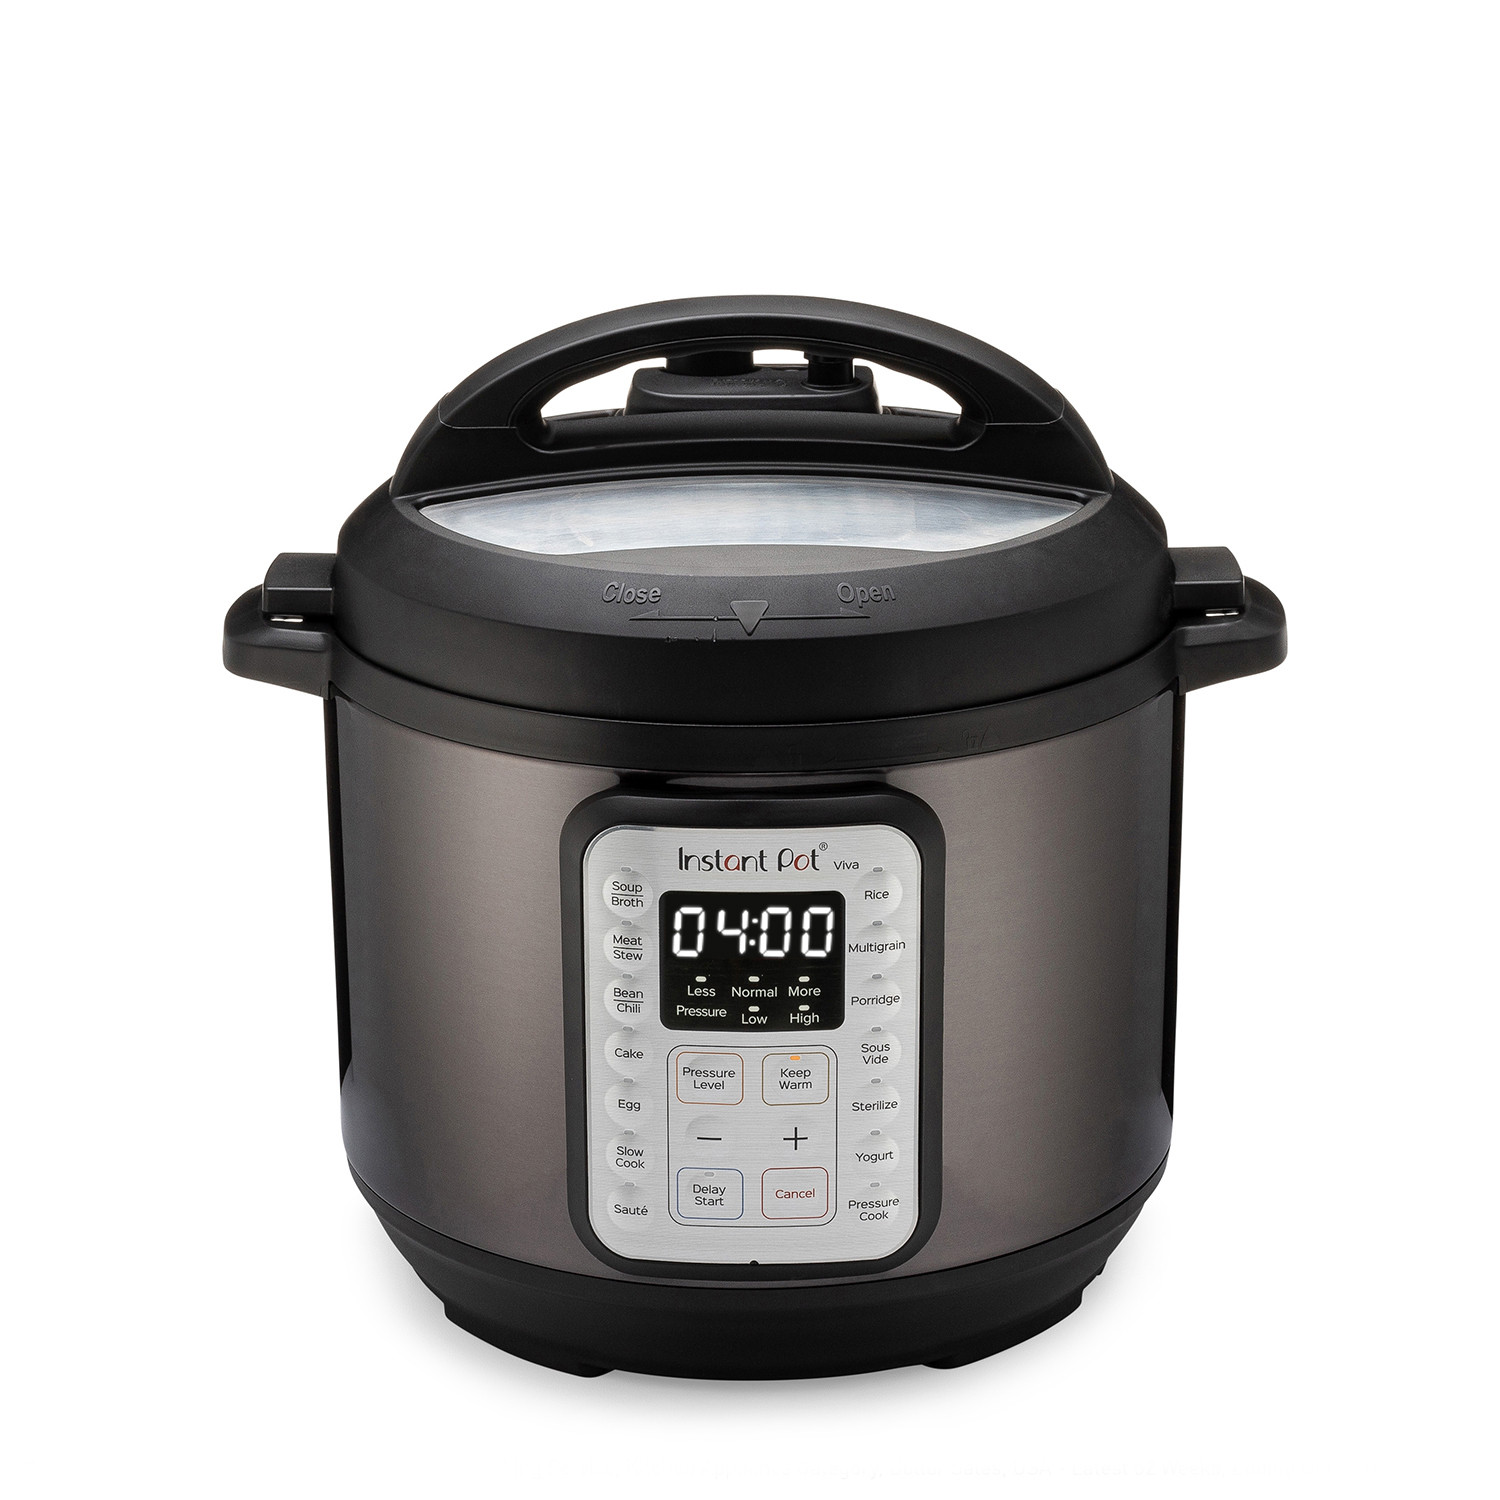 Instant Pot Viva Black Multi-Use 9-in-1 6 Quart Pressure Cooker - image 1 of 6